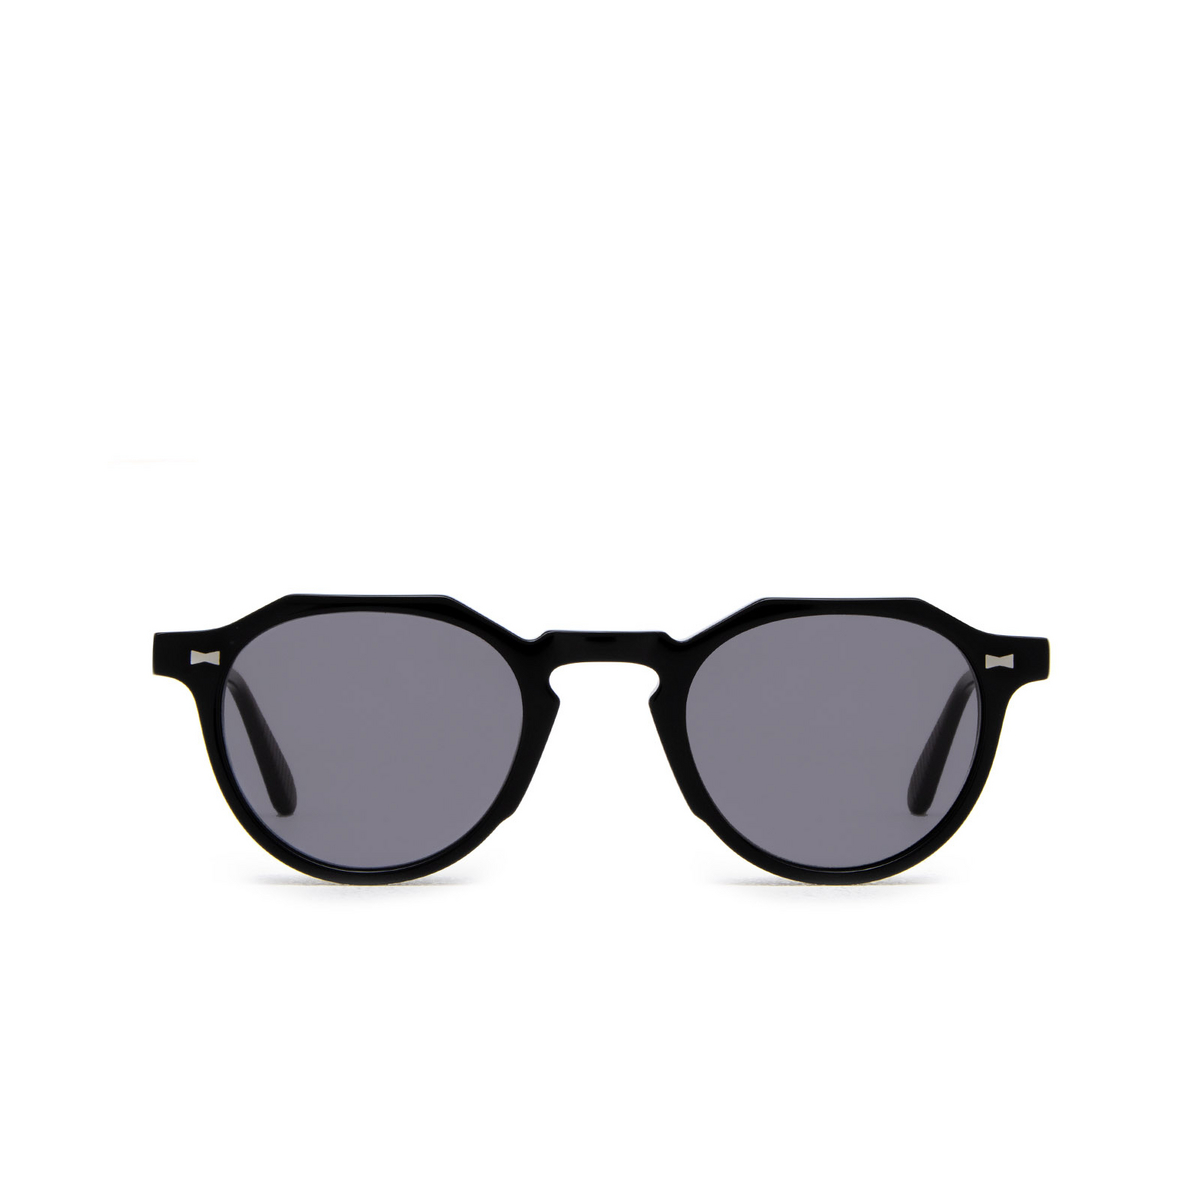 Cubitts CARTWRIGHT Sunglasses CAT-R-BLA Black - front view